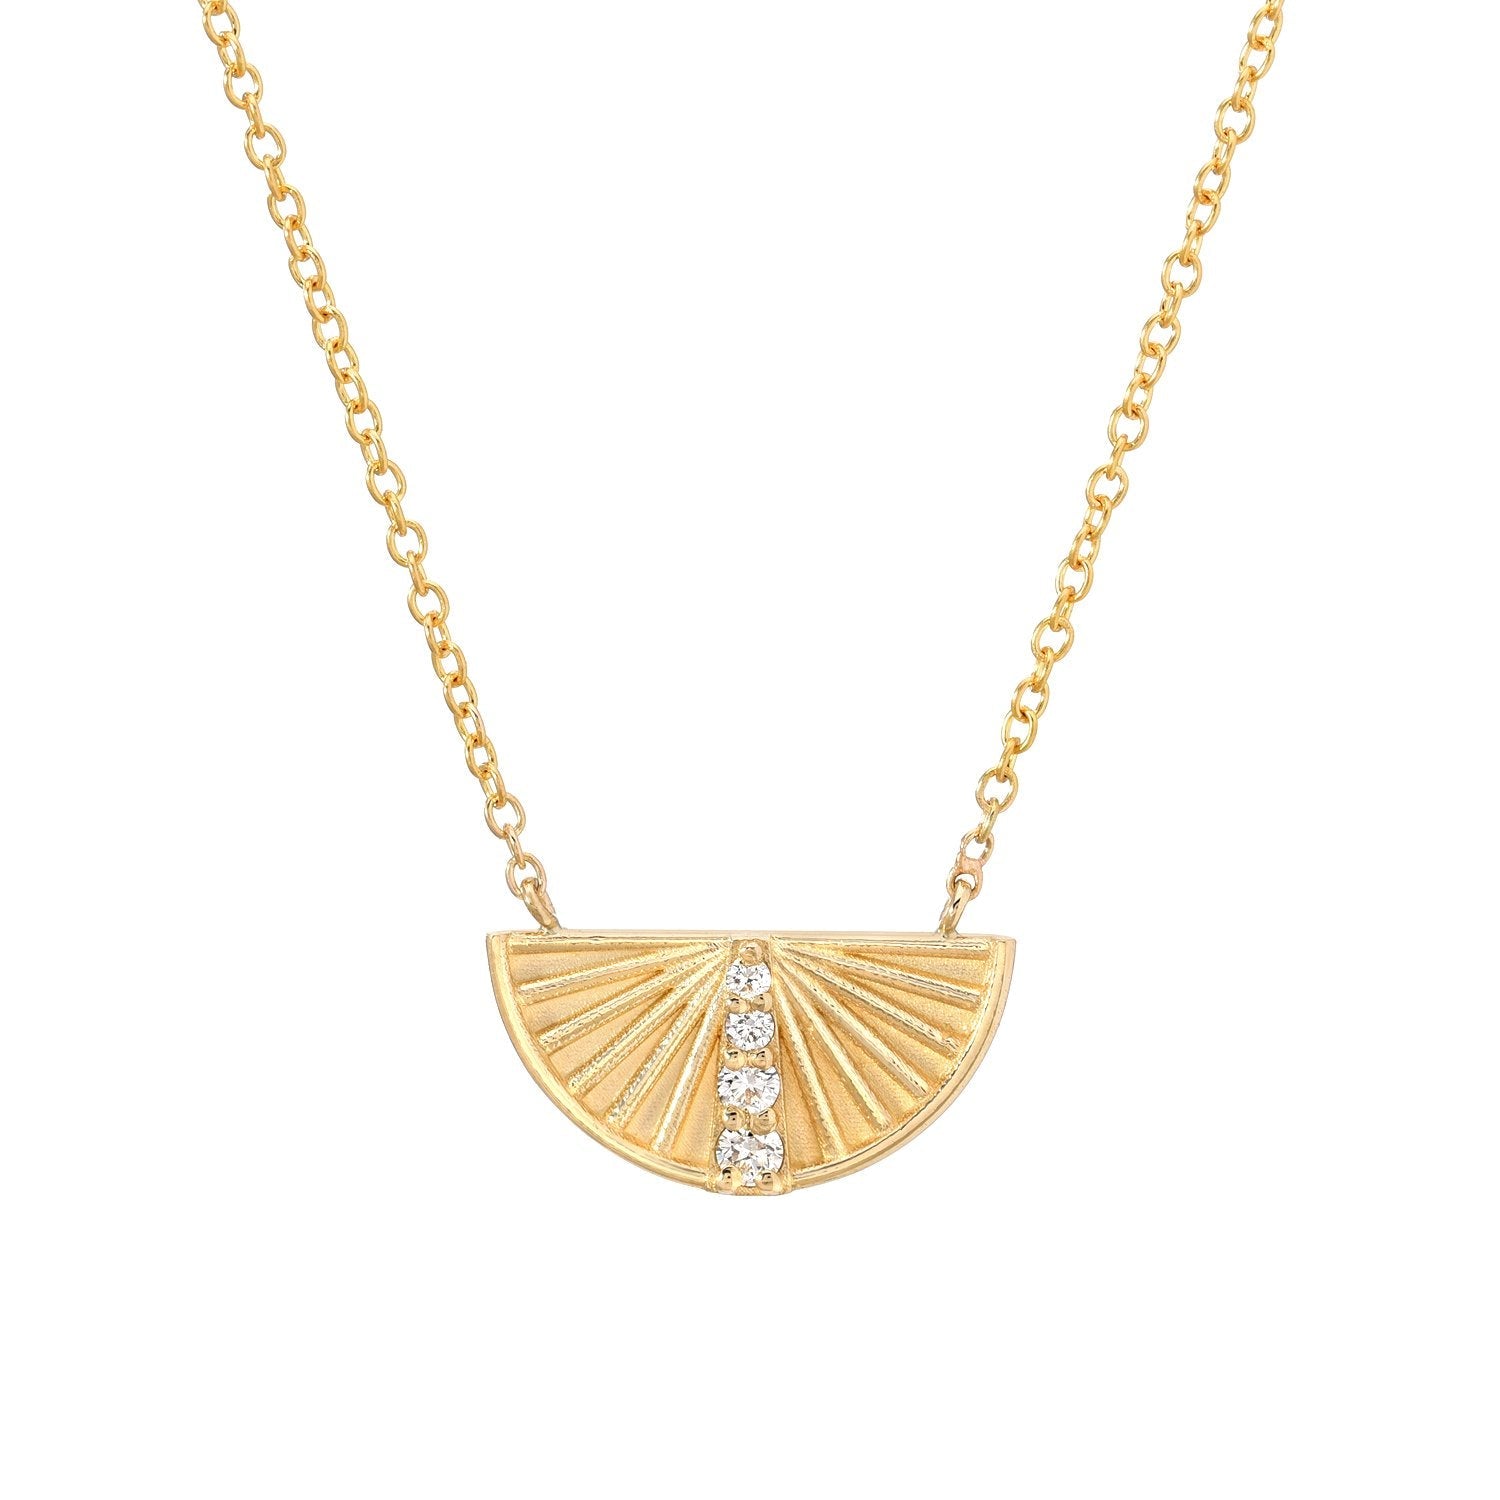 Rise Diamond Necklace - 14k Yellow Gold Half Circle